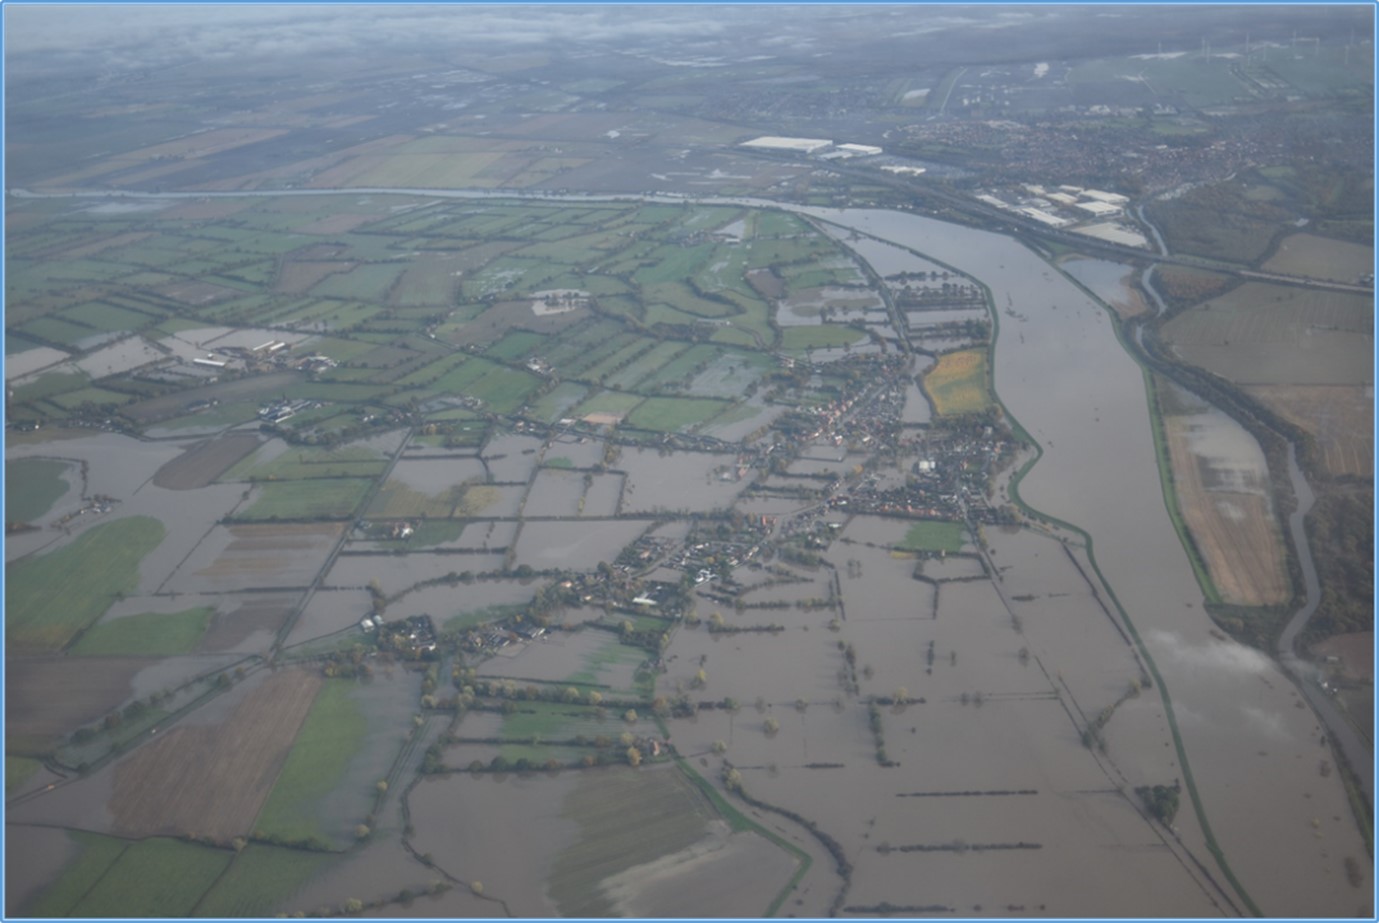 Flooding in Fishlake in 2019